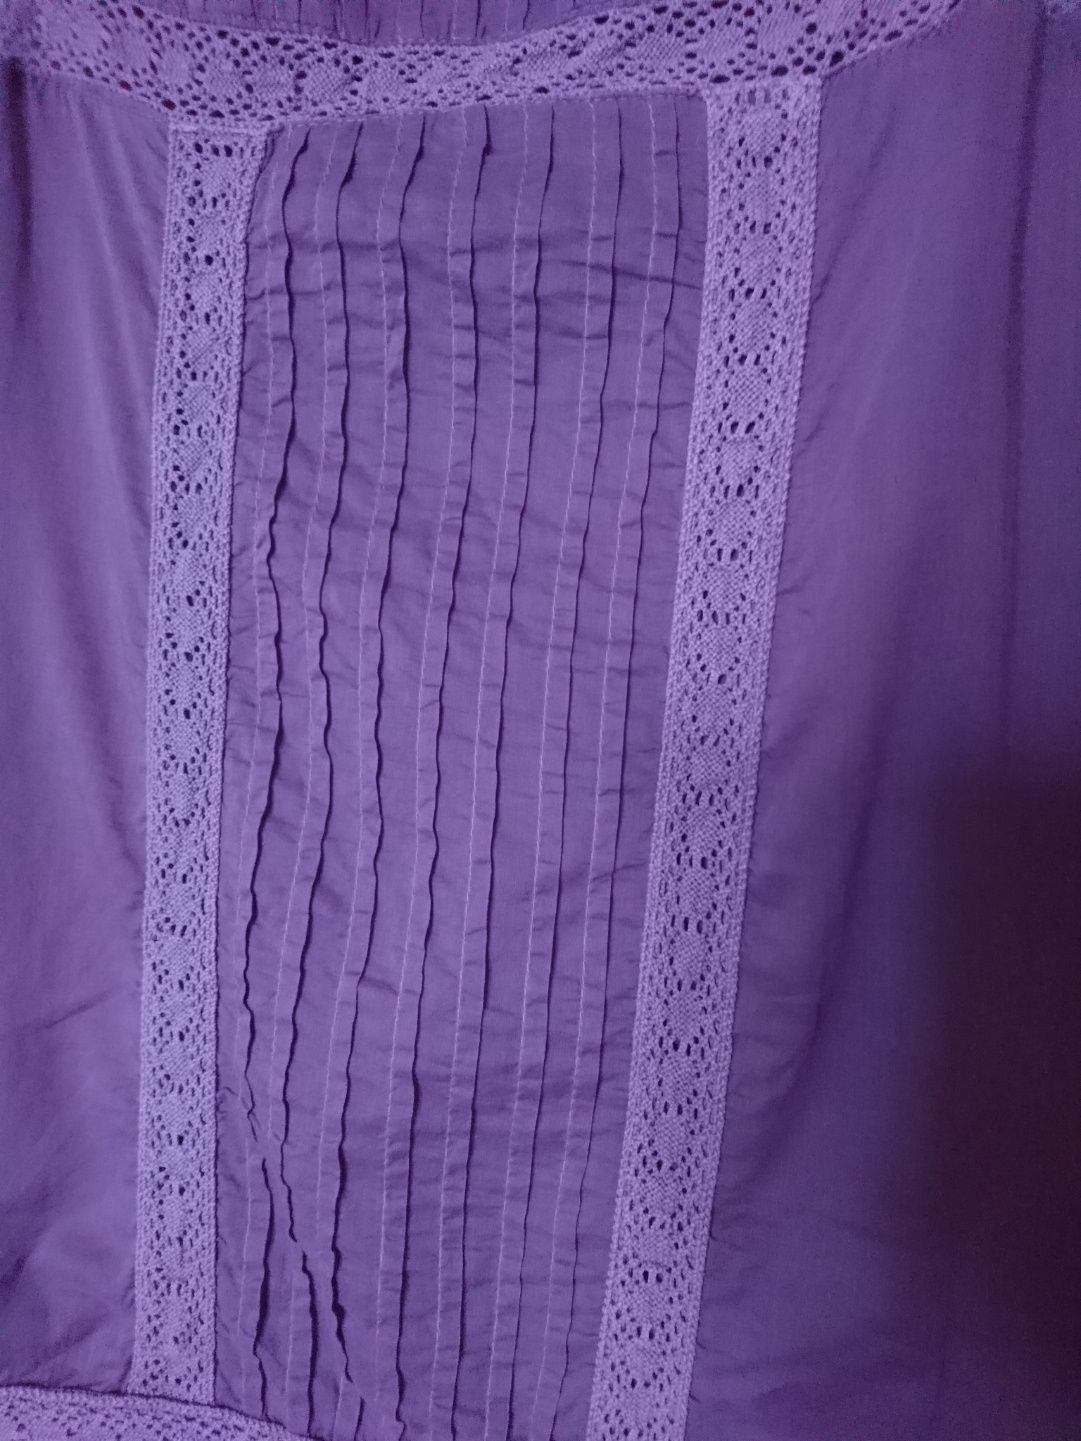 Сарафан плаття платье Zara бузкового кольору 100 % Cotton